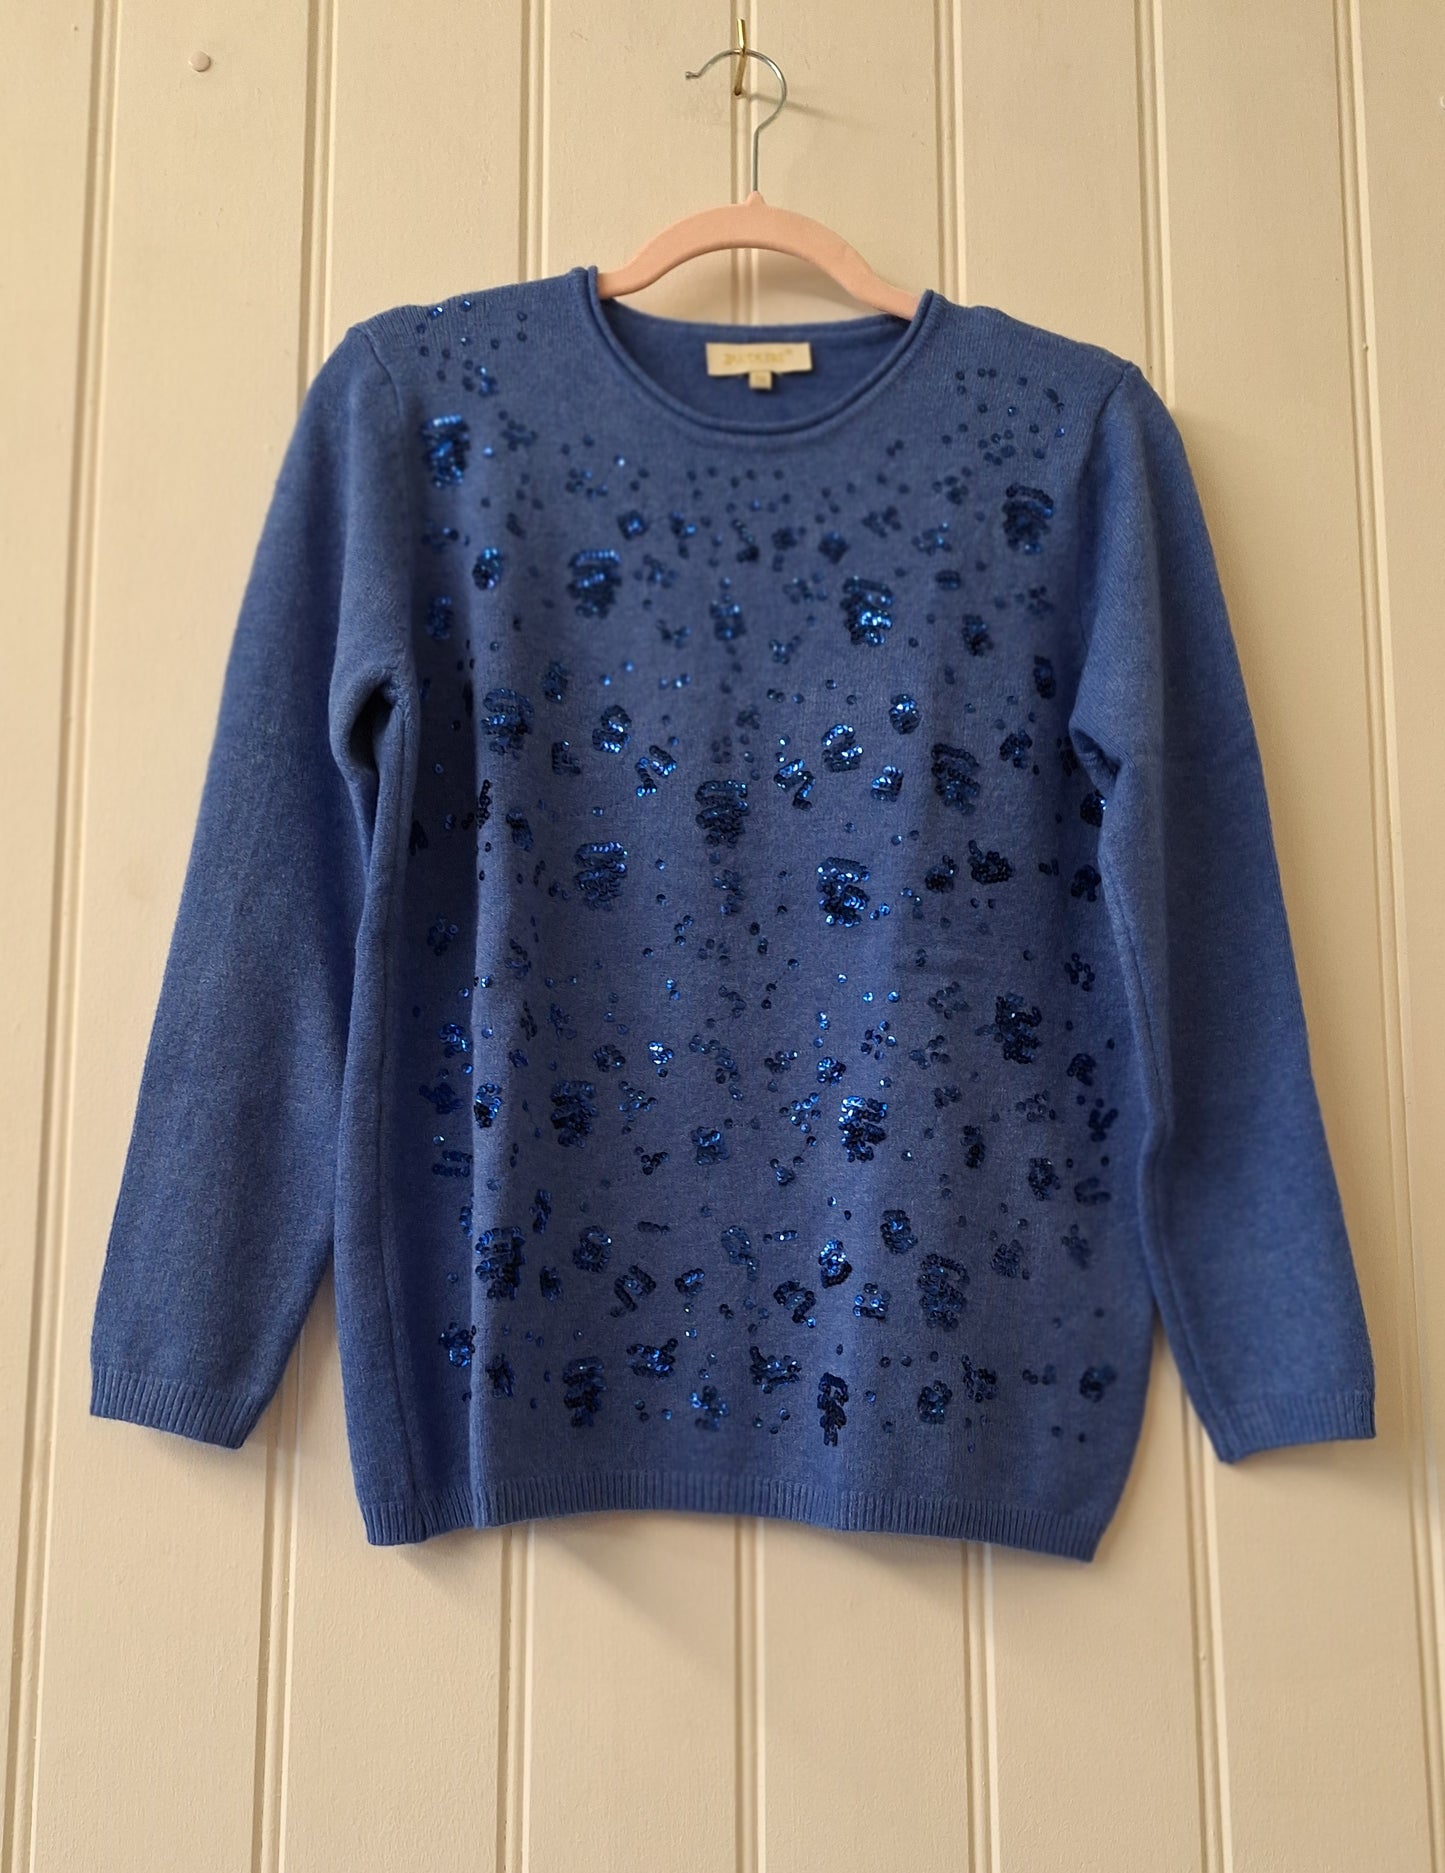 Bluoltre blue sequin knit S